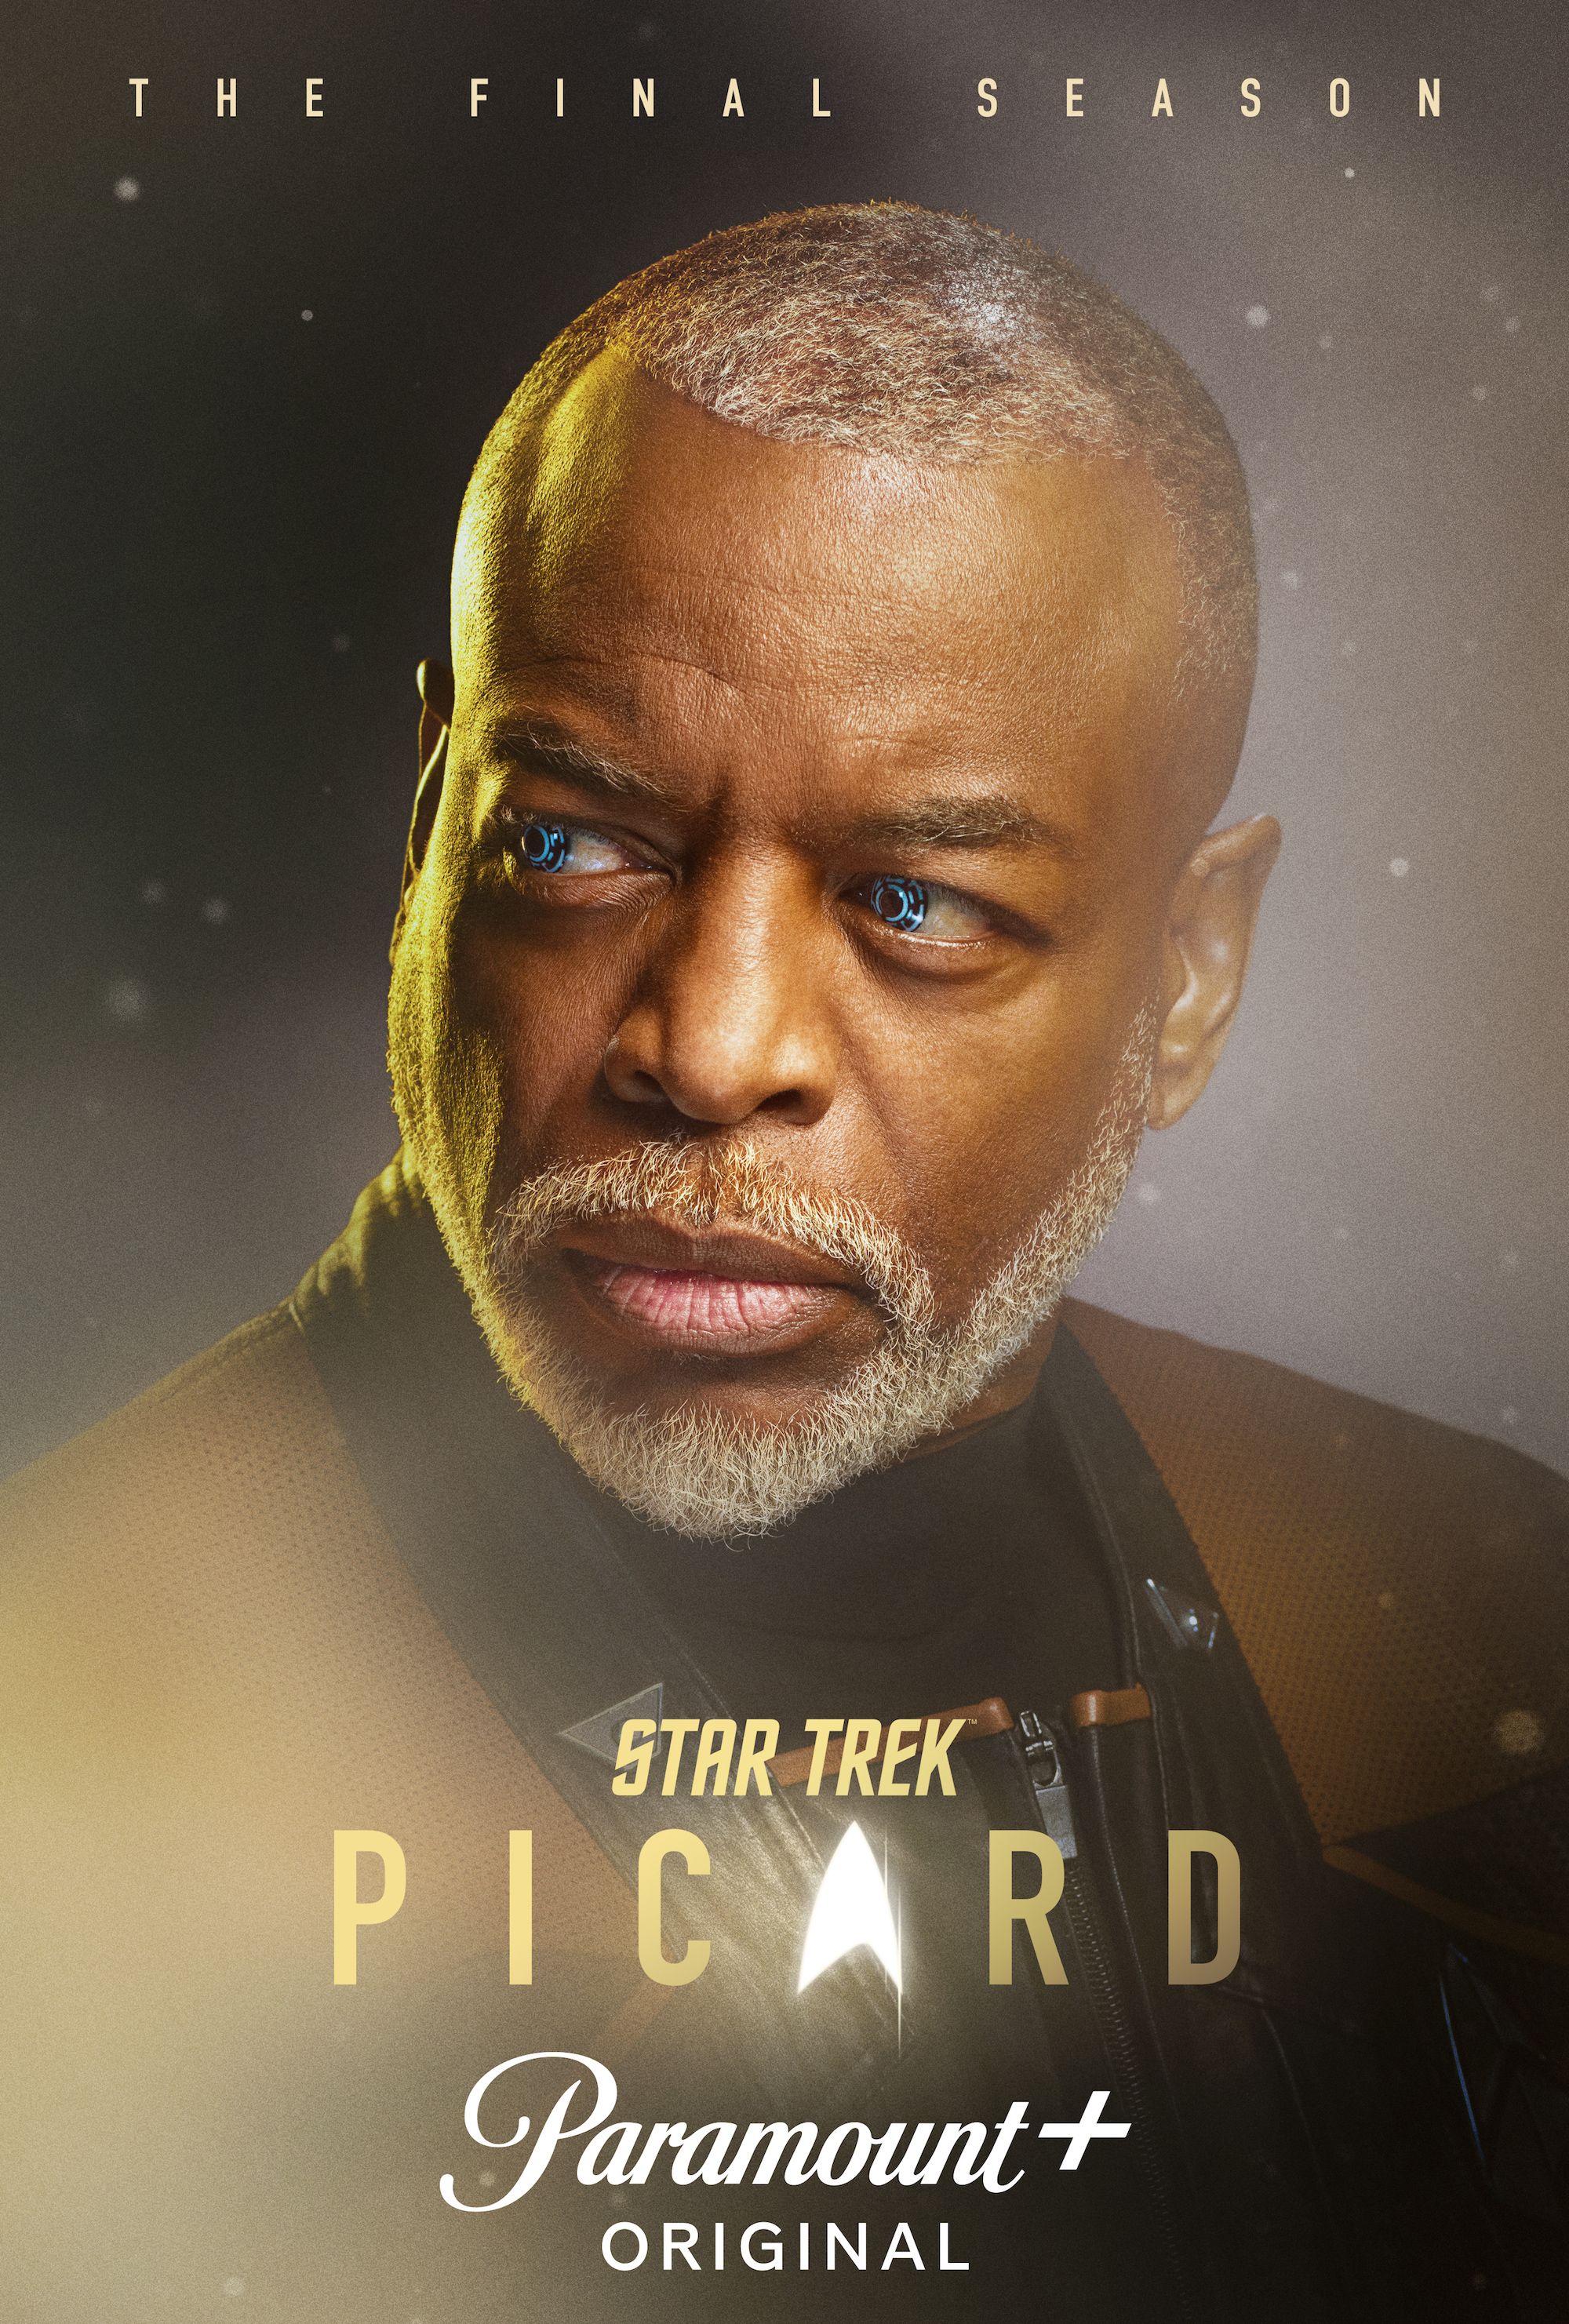 LeVar Burton as Geordi La Forge in Star Trek Picard Season 3